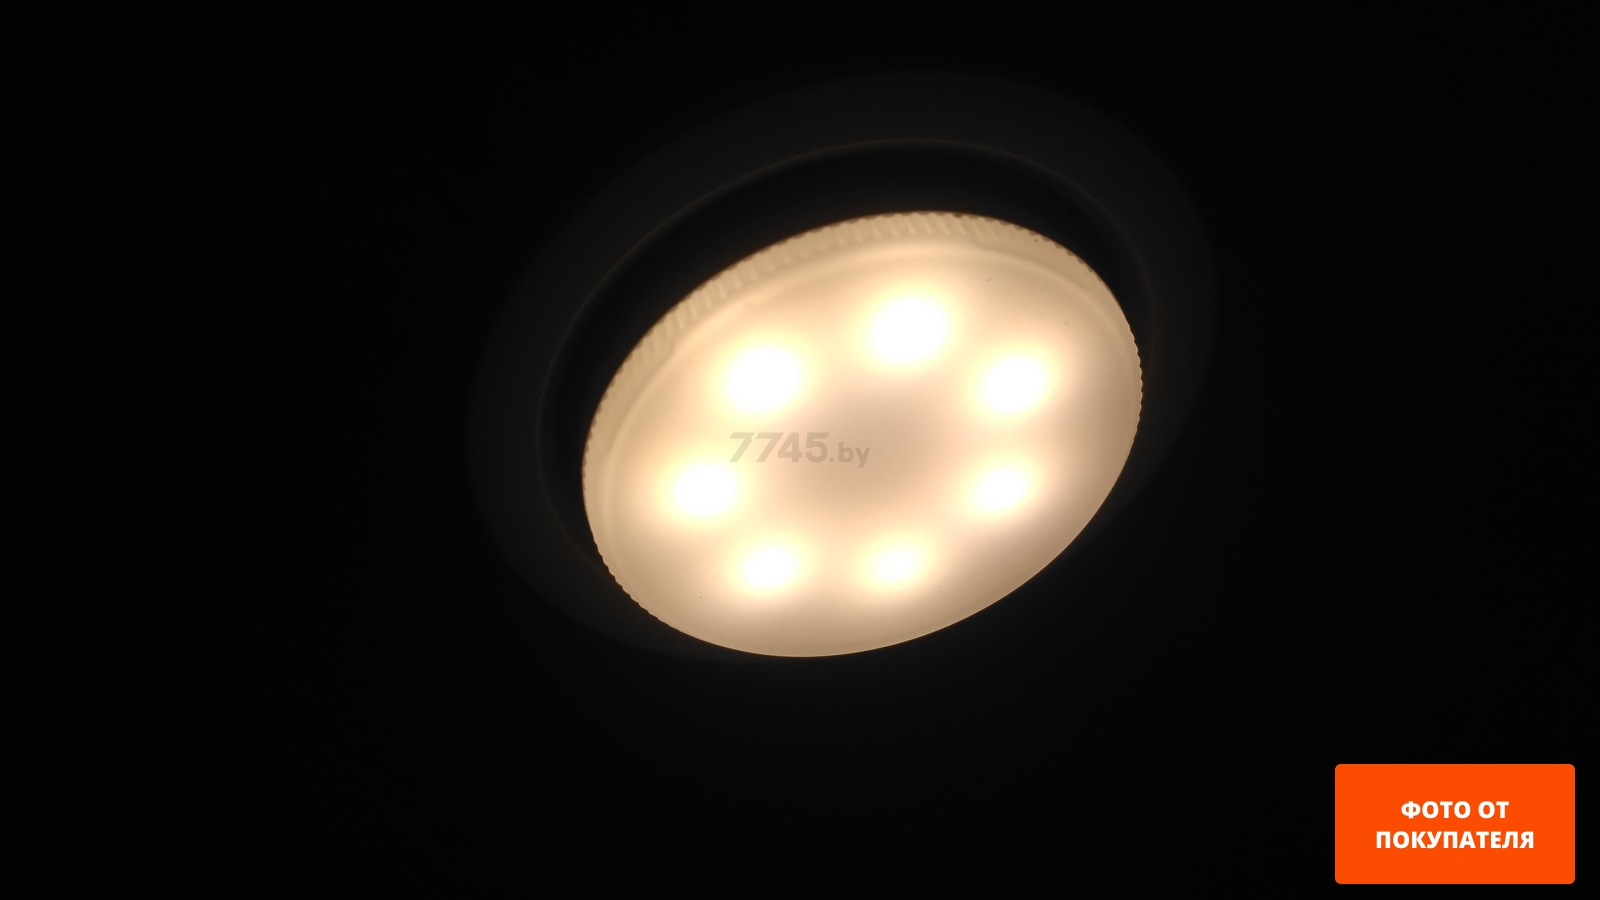 Лампа светодиодная GX53 ЮПИТЕР 7 Вт 4000К (JP5085-07)